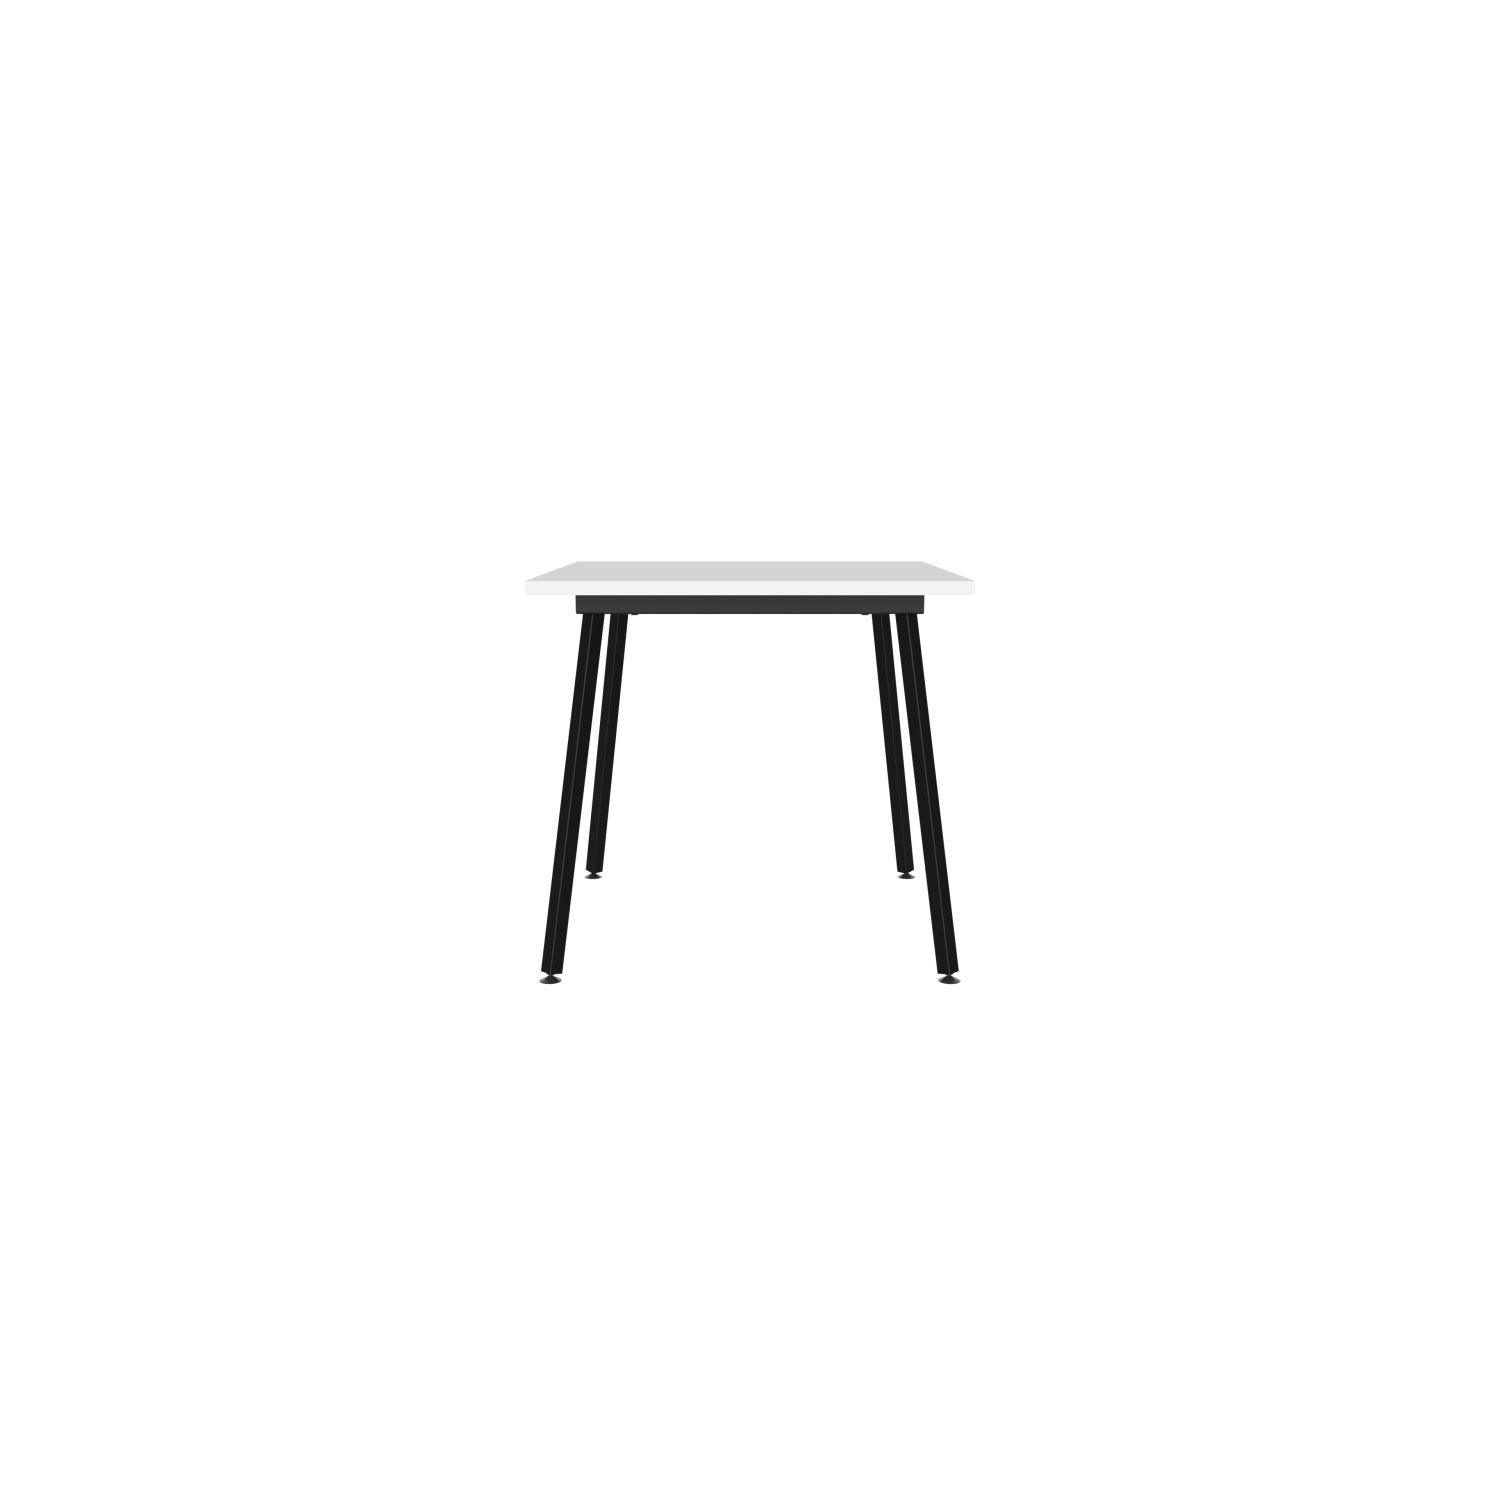 lensvelt maarten baas table fixed height 80x80 table top 26 mm top melamine white edge abs white black frame ral9005